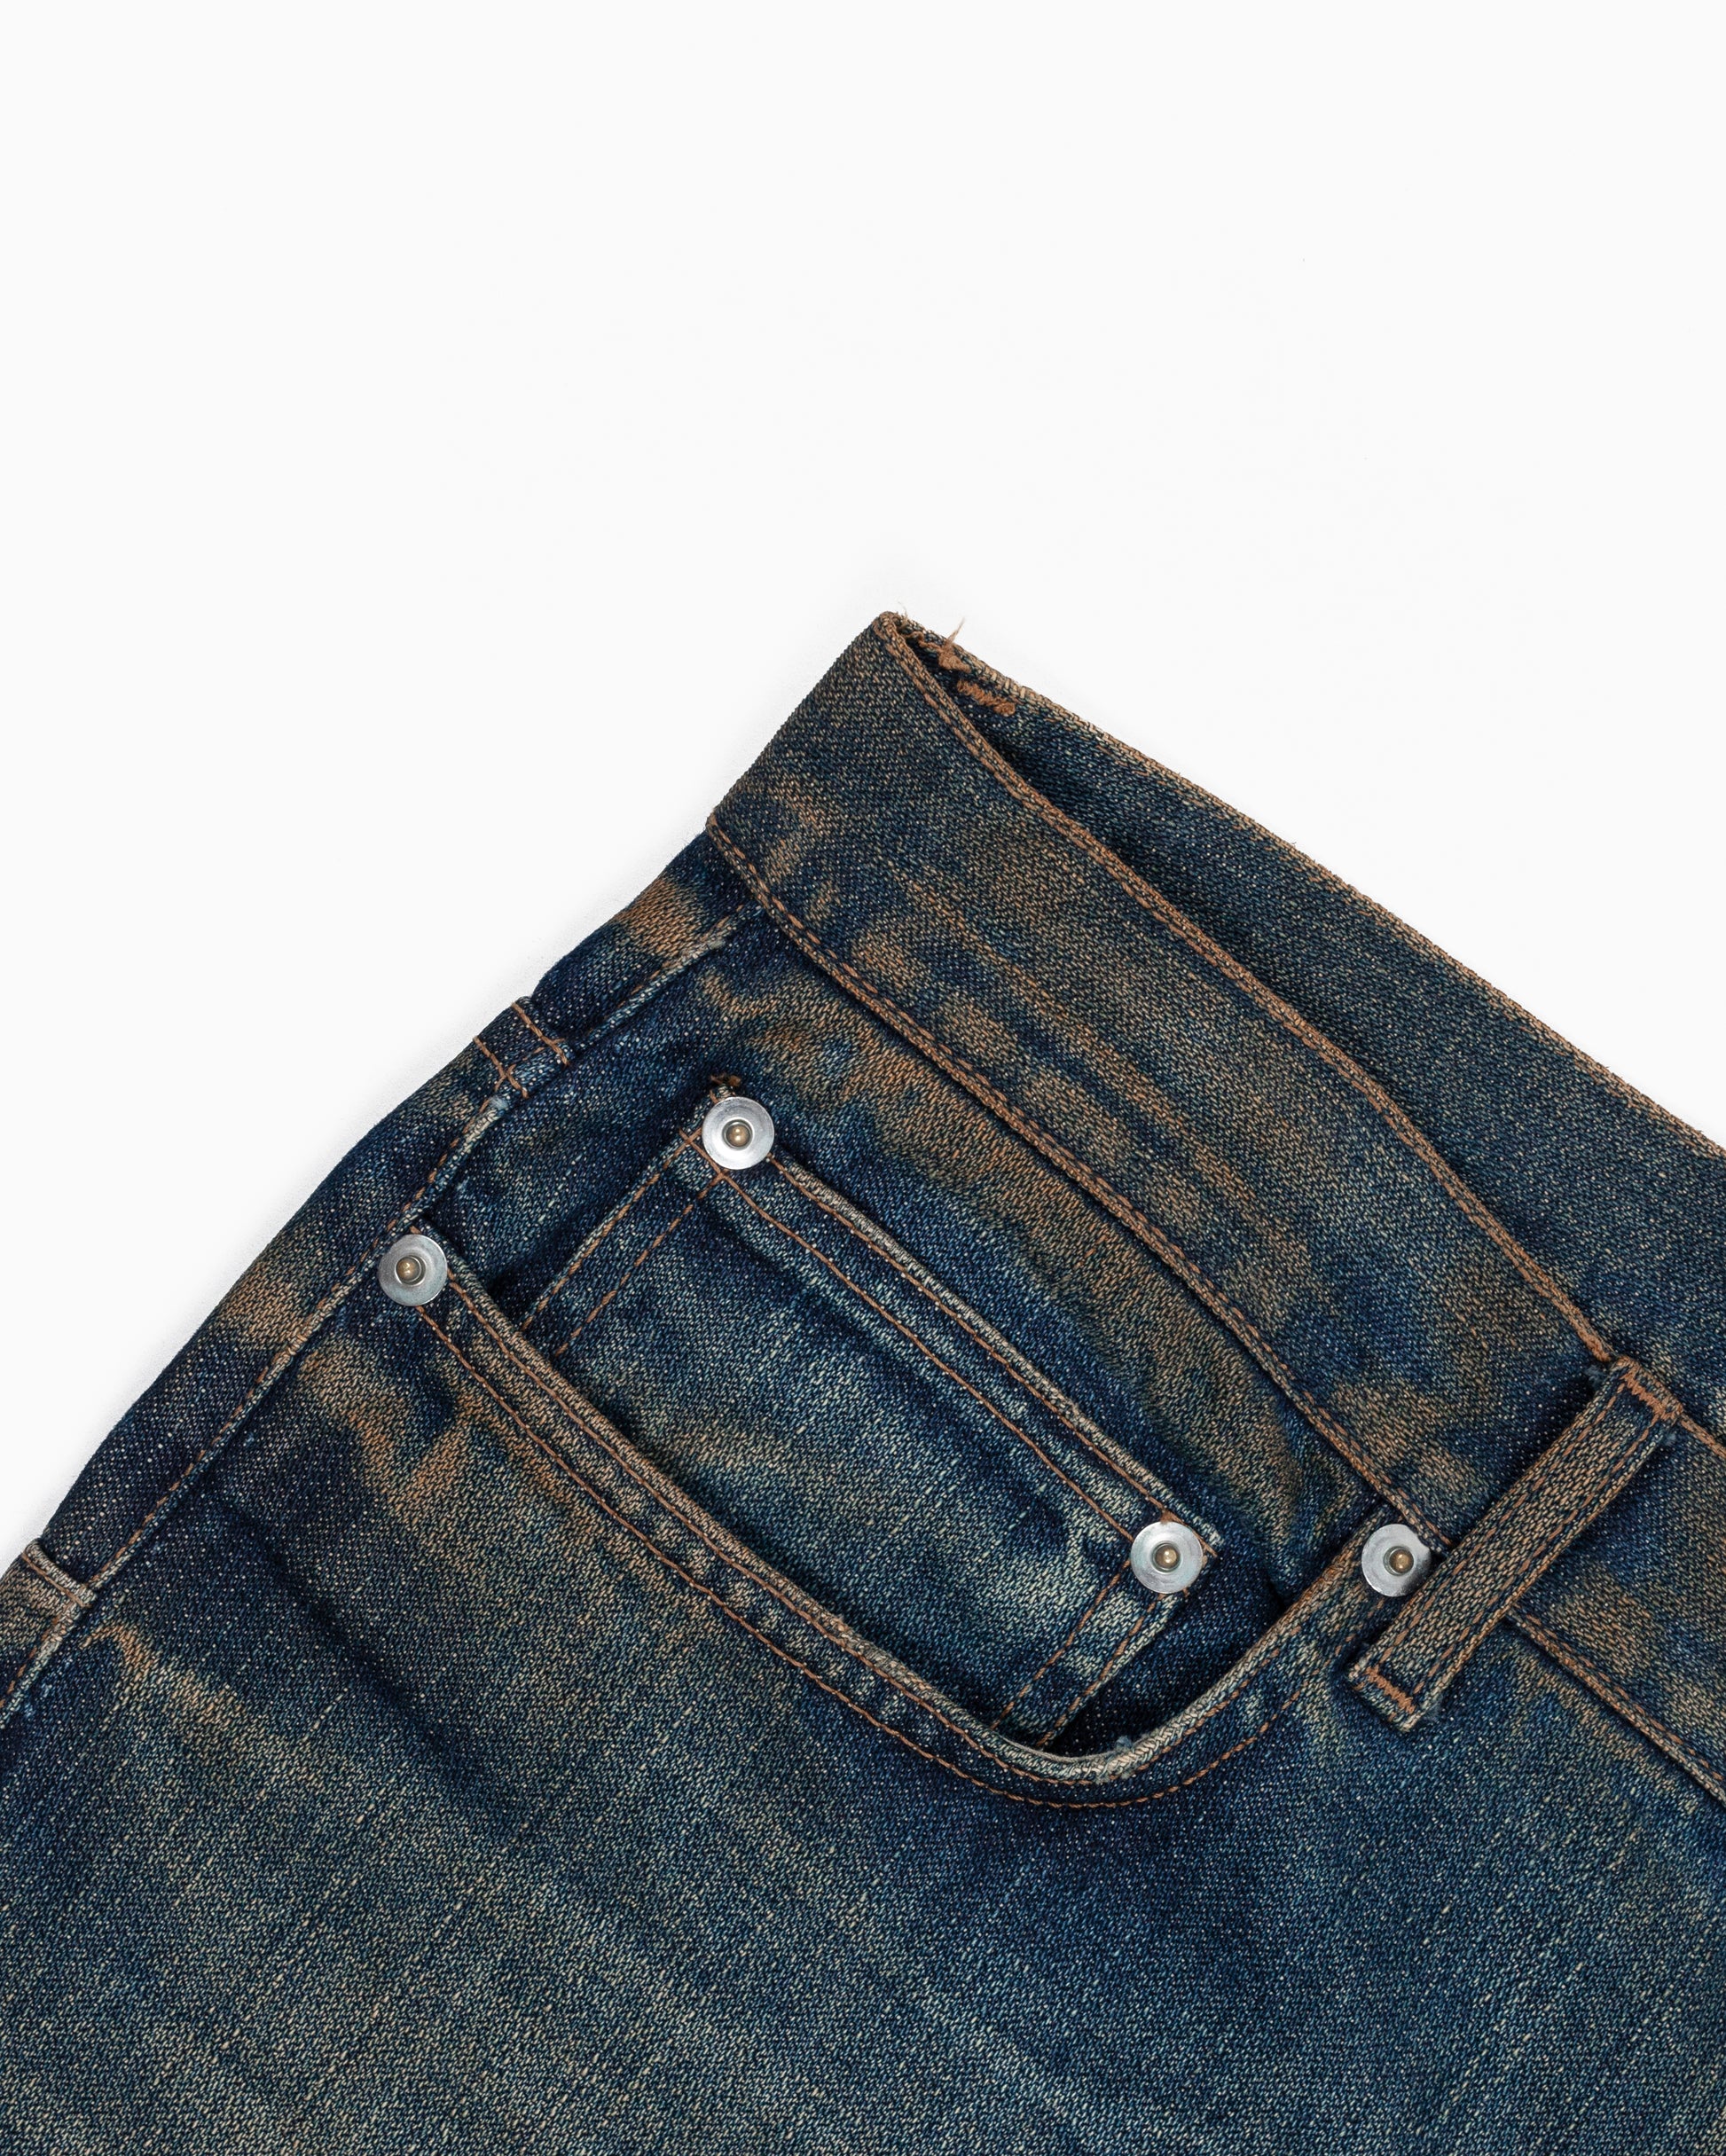 Dior Homme Mud Wash Denim Jeans - 2000s - SILVER LEAGUE